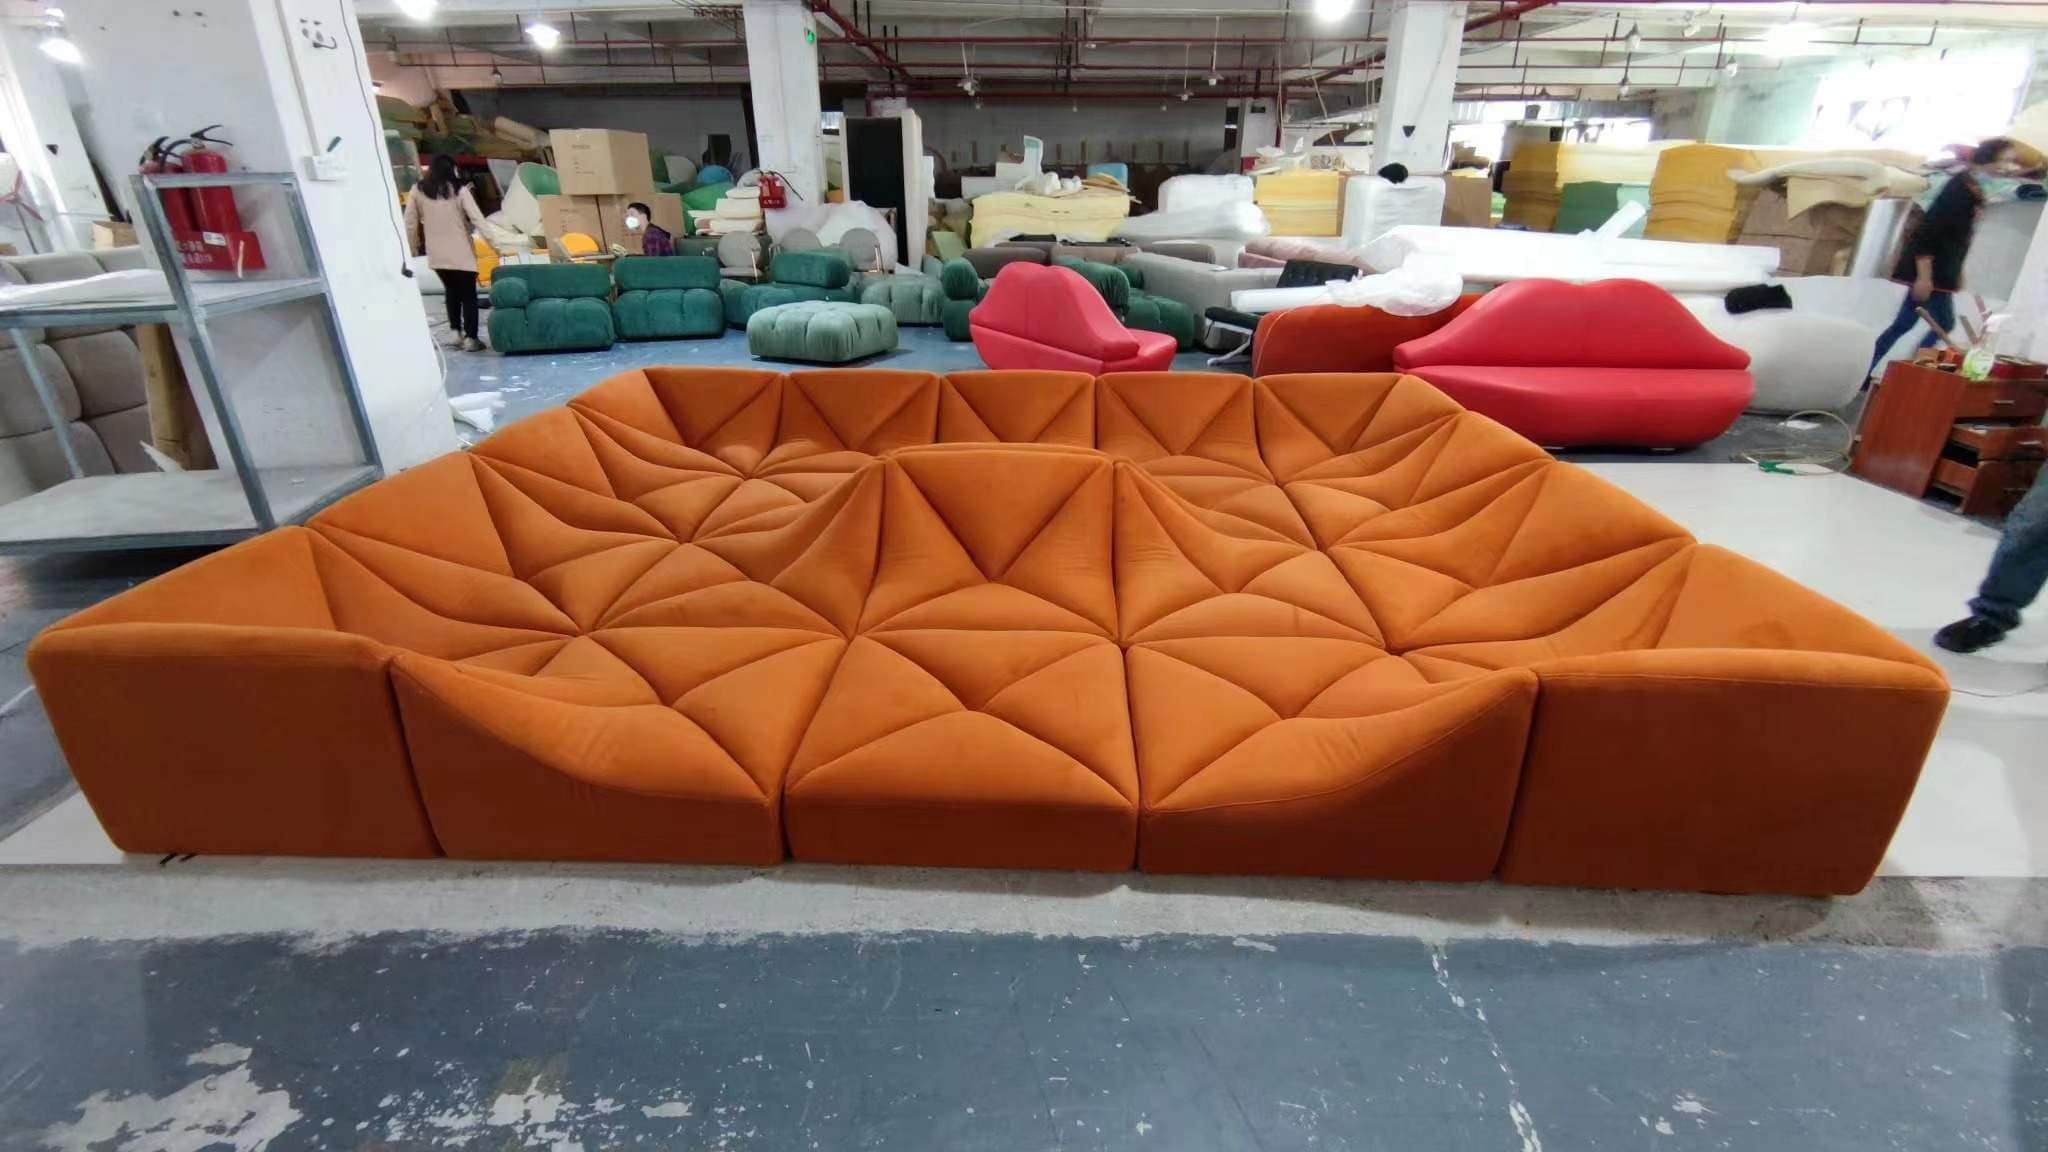 Contour Dune Topography Modular Sofa Lounge Comfy Lie Down